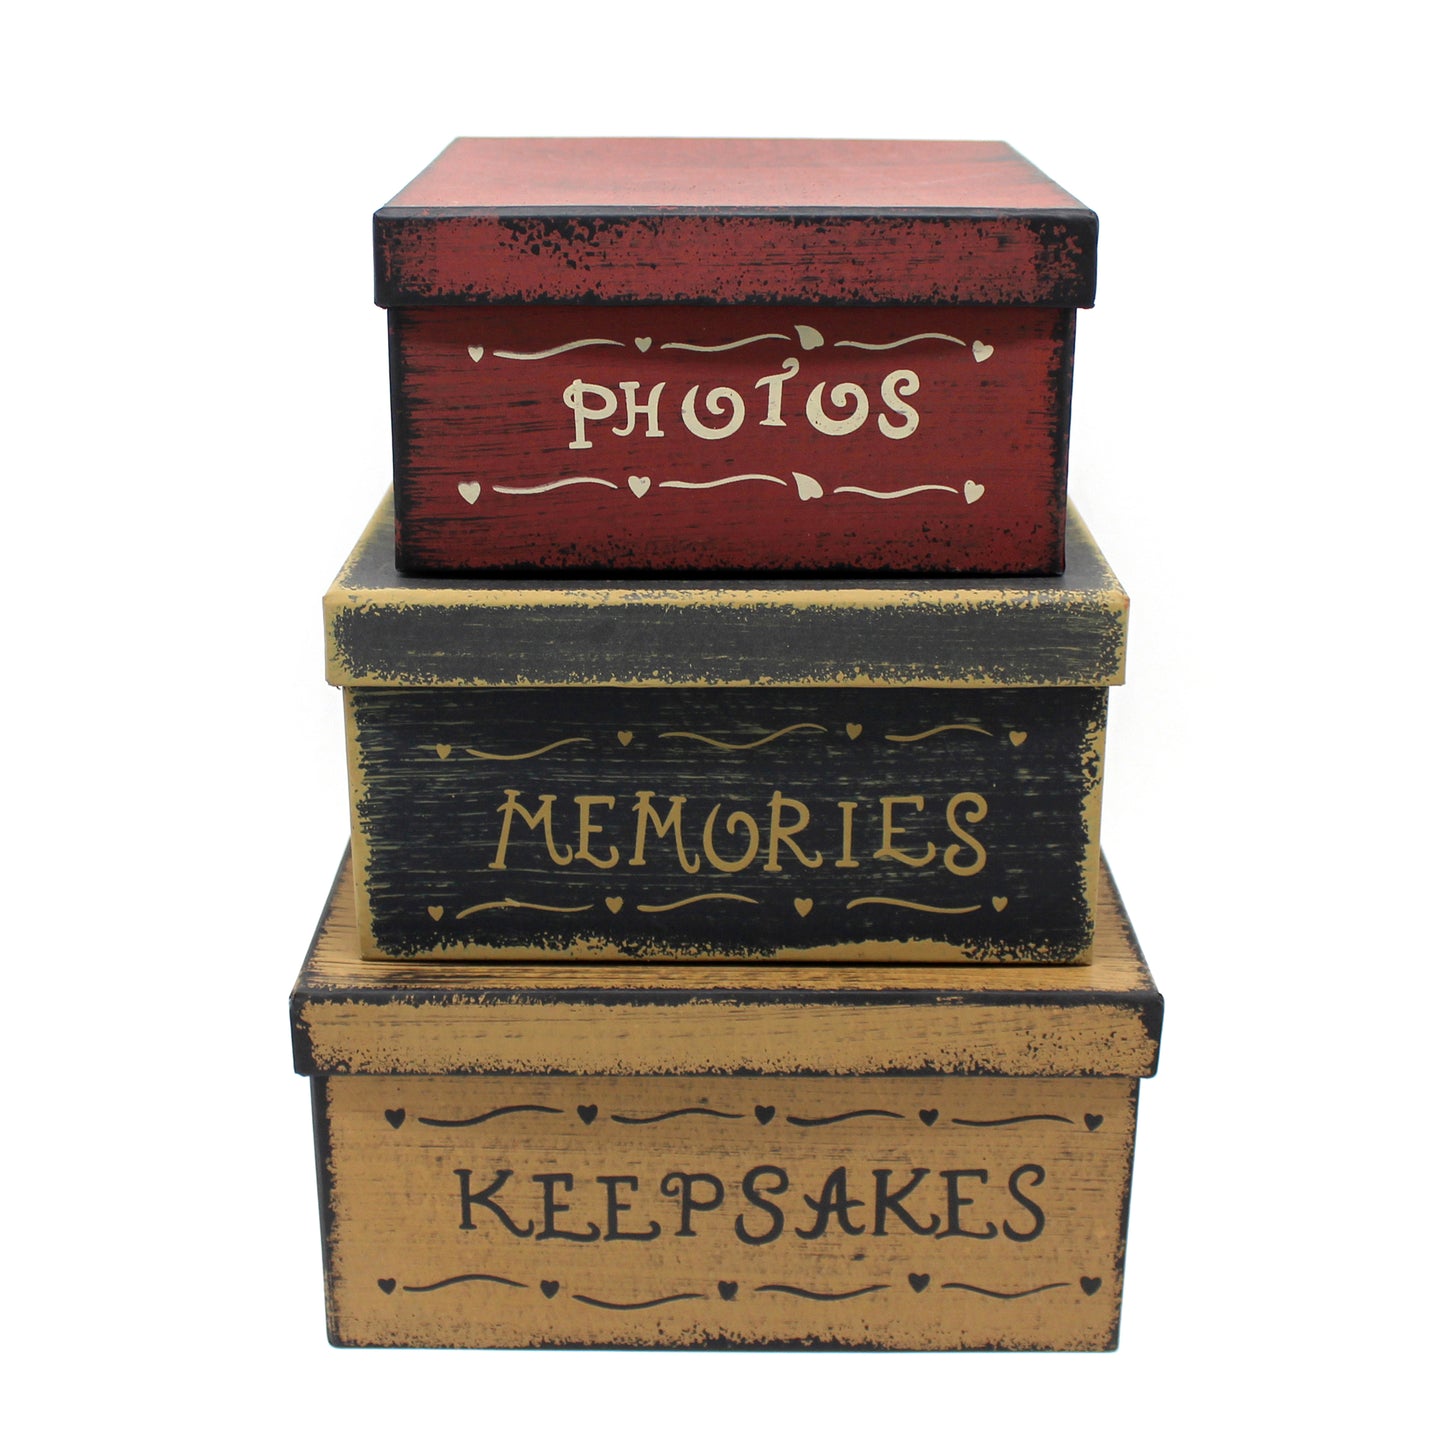 CVHOMEDECO. Primitive Vintage Square Photos, Memories, Keepsakes Cardboard Nesting Boxes, Large 9 X 9 X 4.5 Inch. Set of 3.